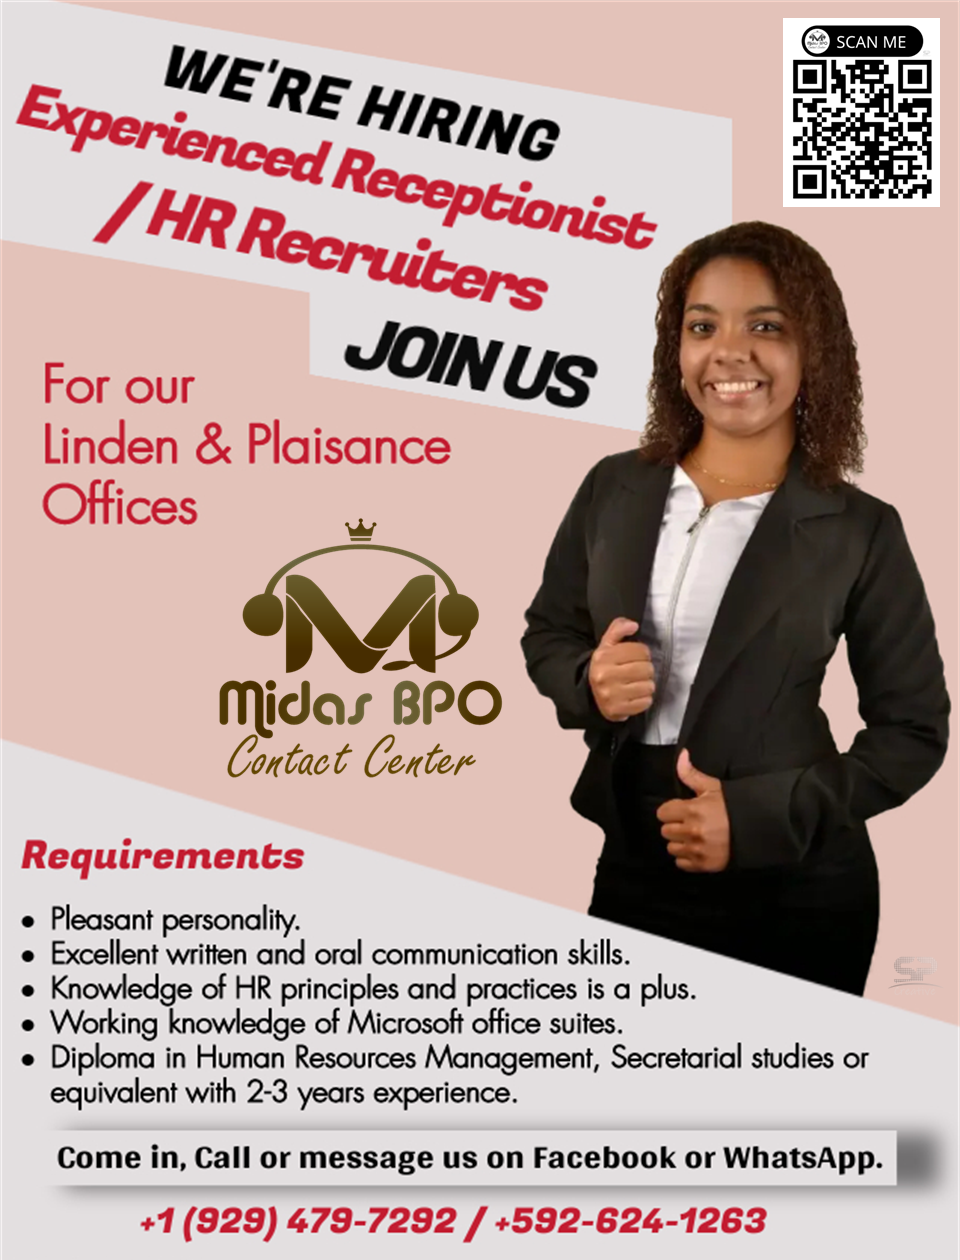 Vacancies for HR Recruiter/Receptionists